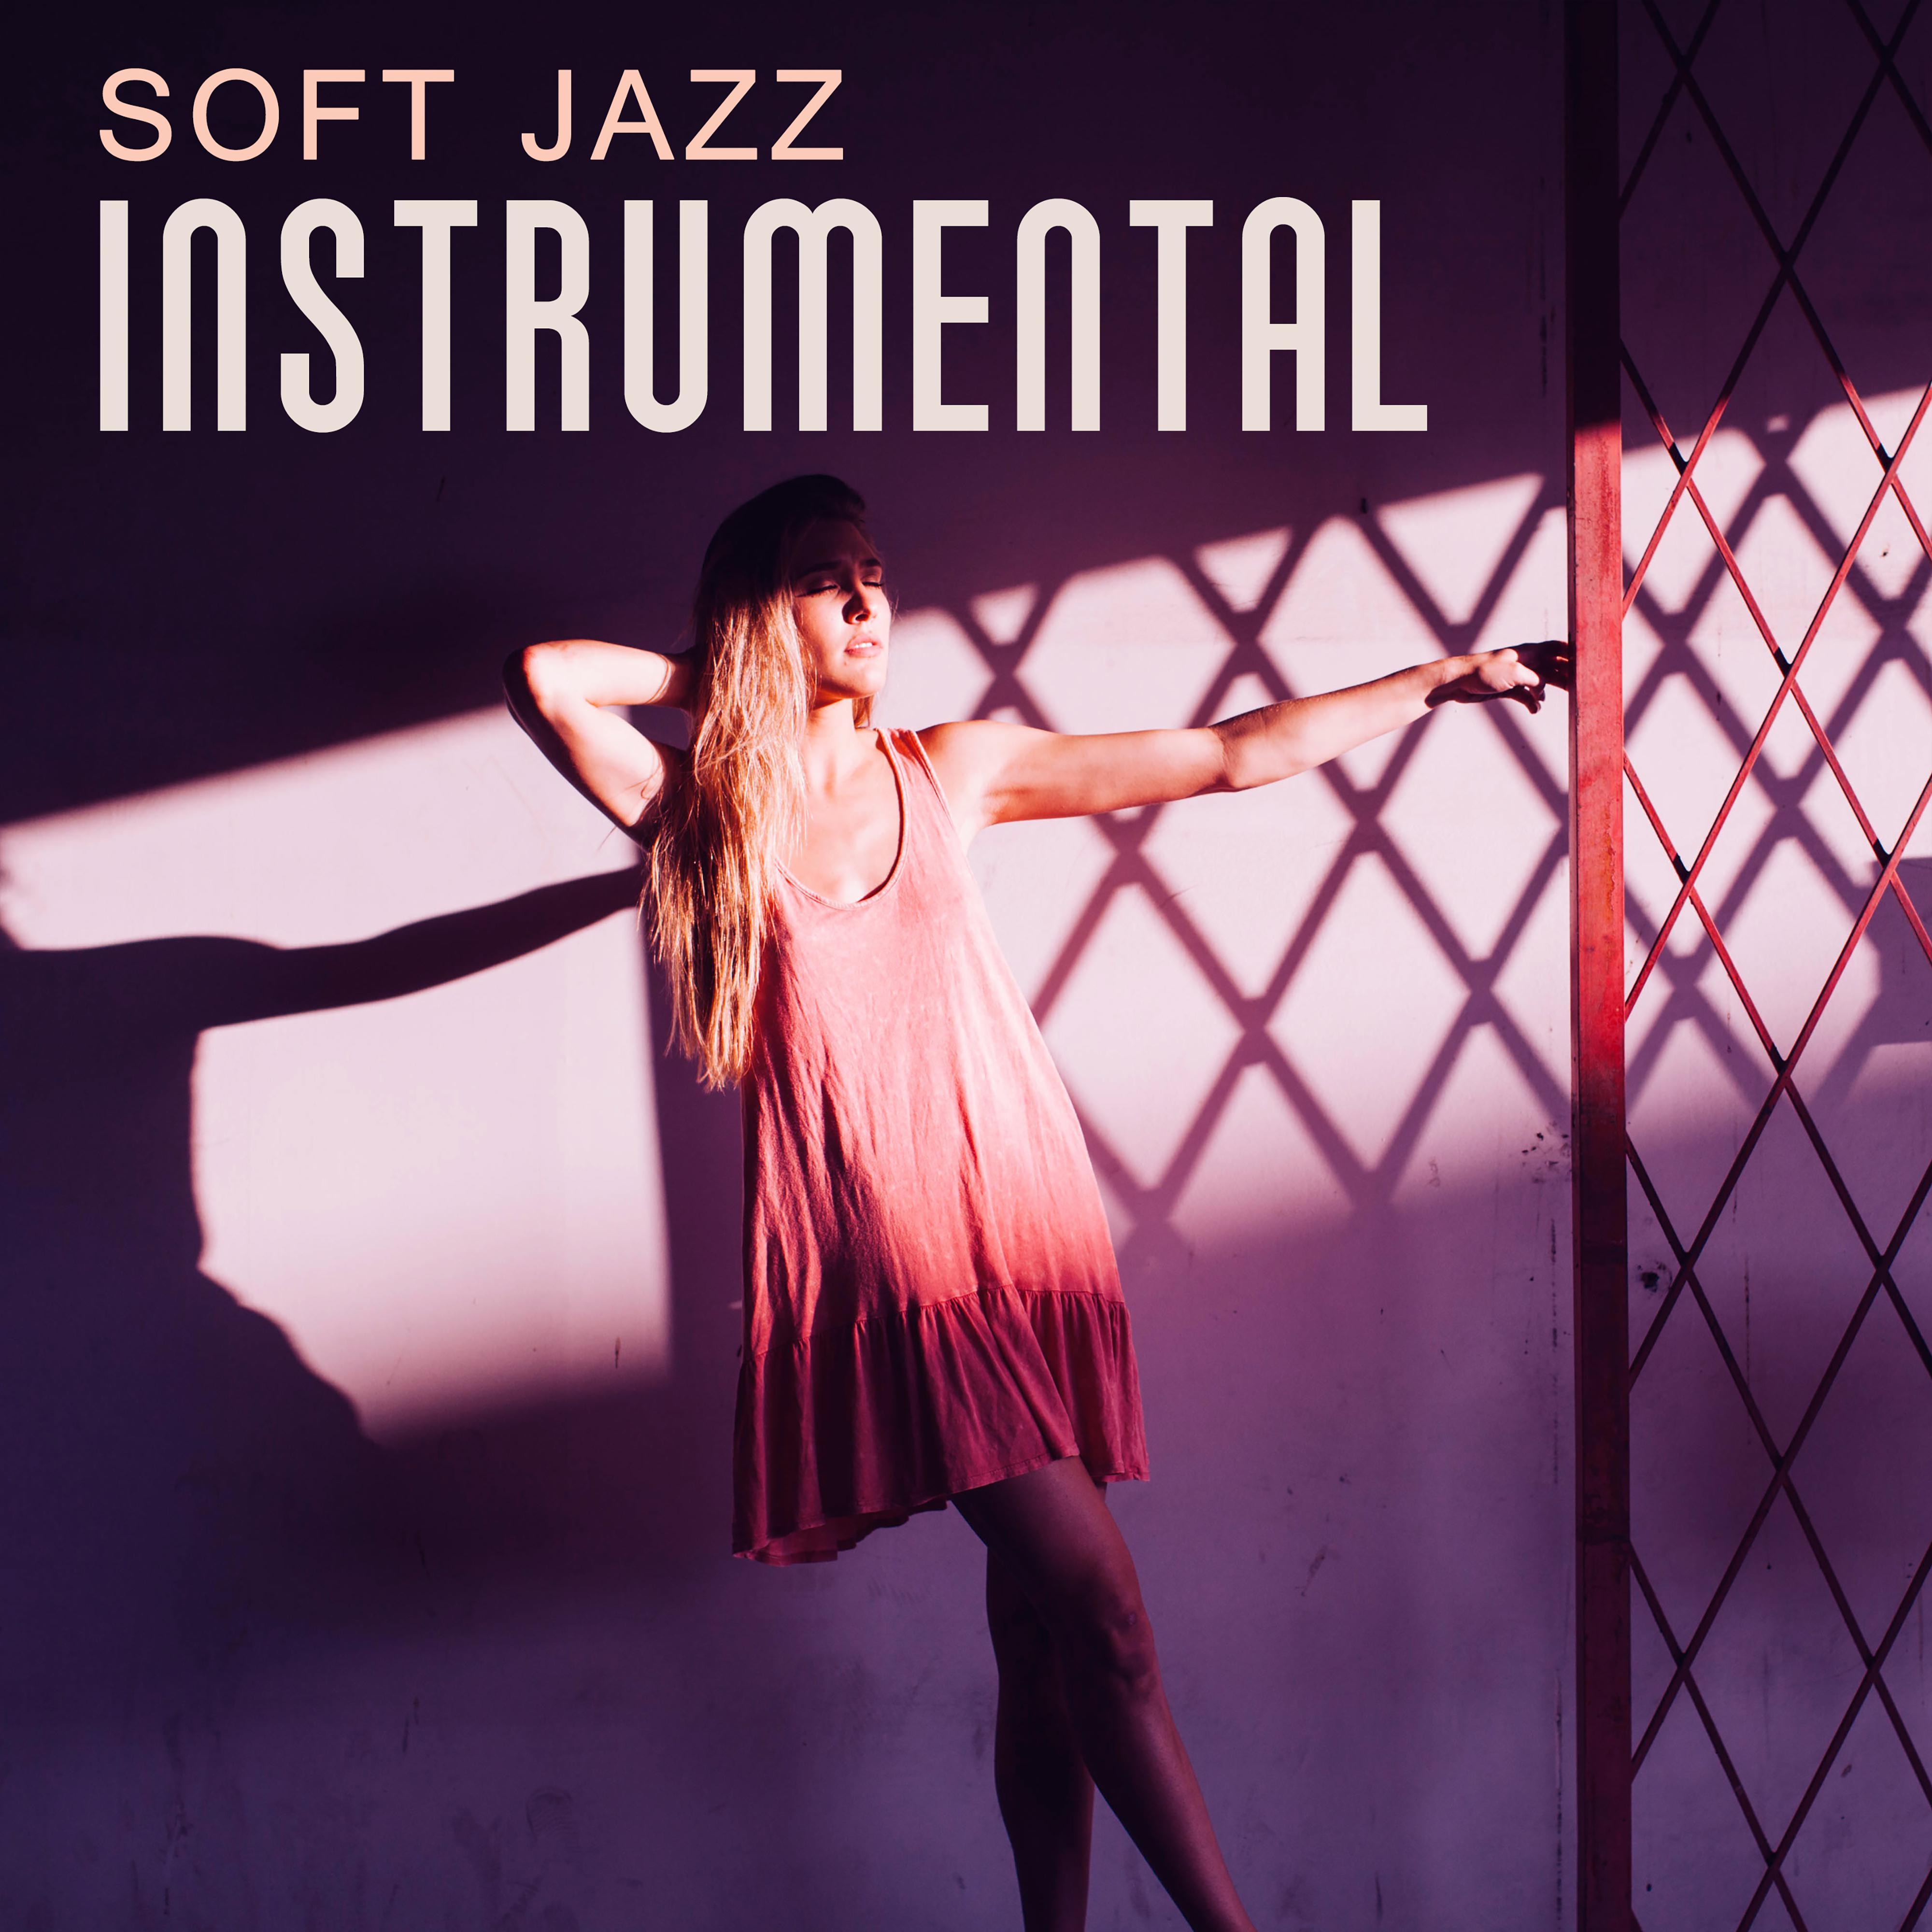 Soft Jazz Instrumental  Calming Jazz, Instrumental Music, Piano and Guitar, Ambient Jazz Music, Relaxing Jazz